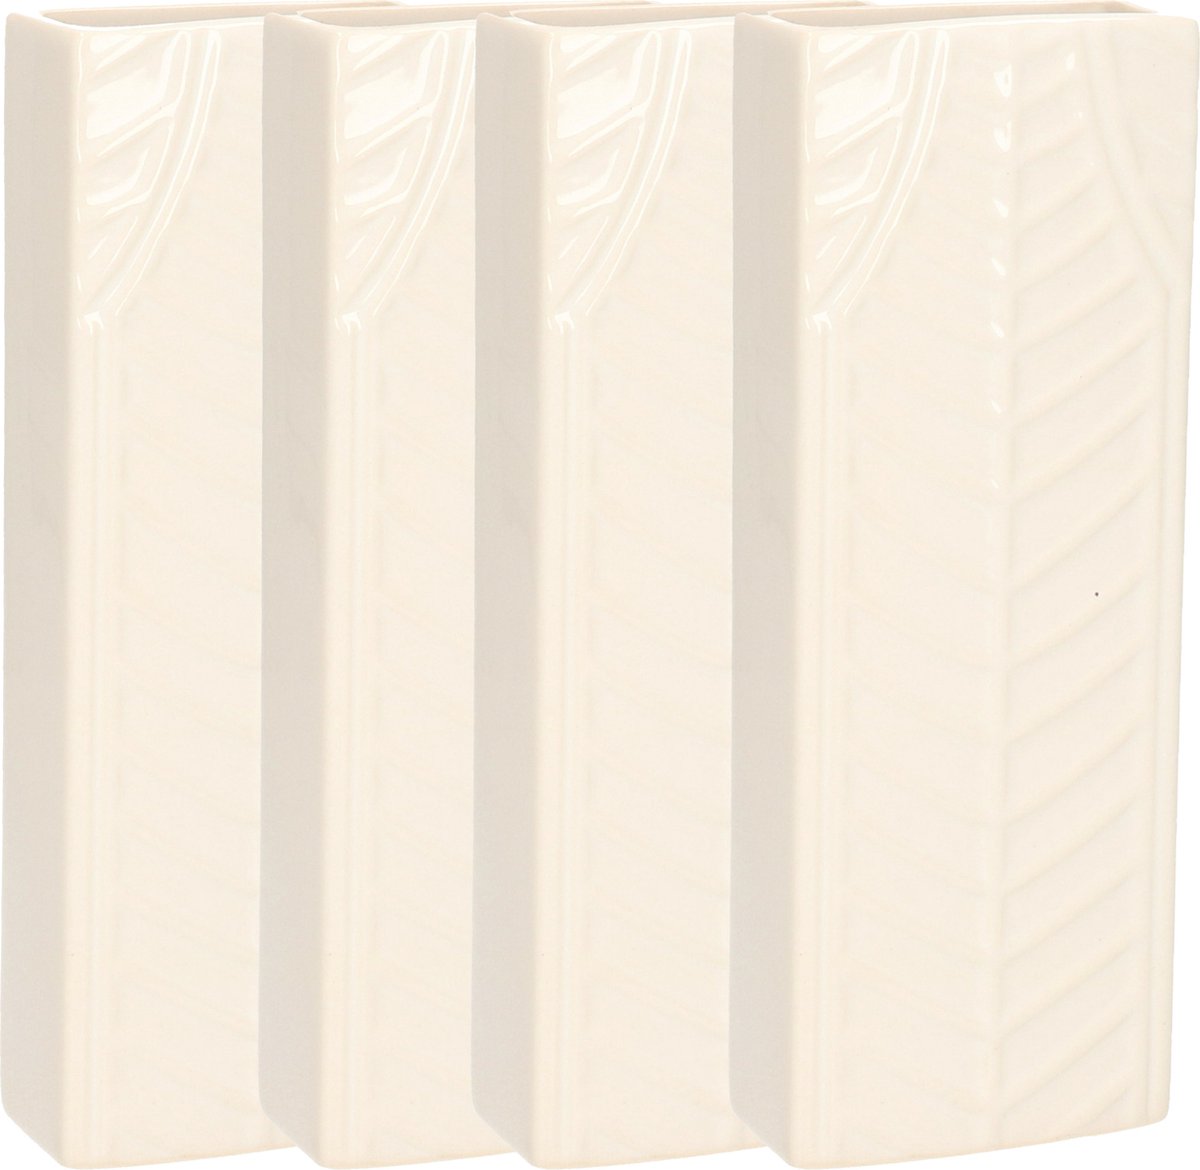 Gerimport Waterverdamper - 8x - ivoor wit - keramiek - 400 ml - radiatorbak luchtbevochtiger - 7,4 x 18,6 cm